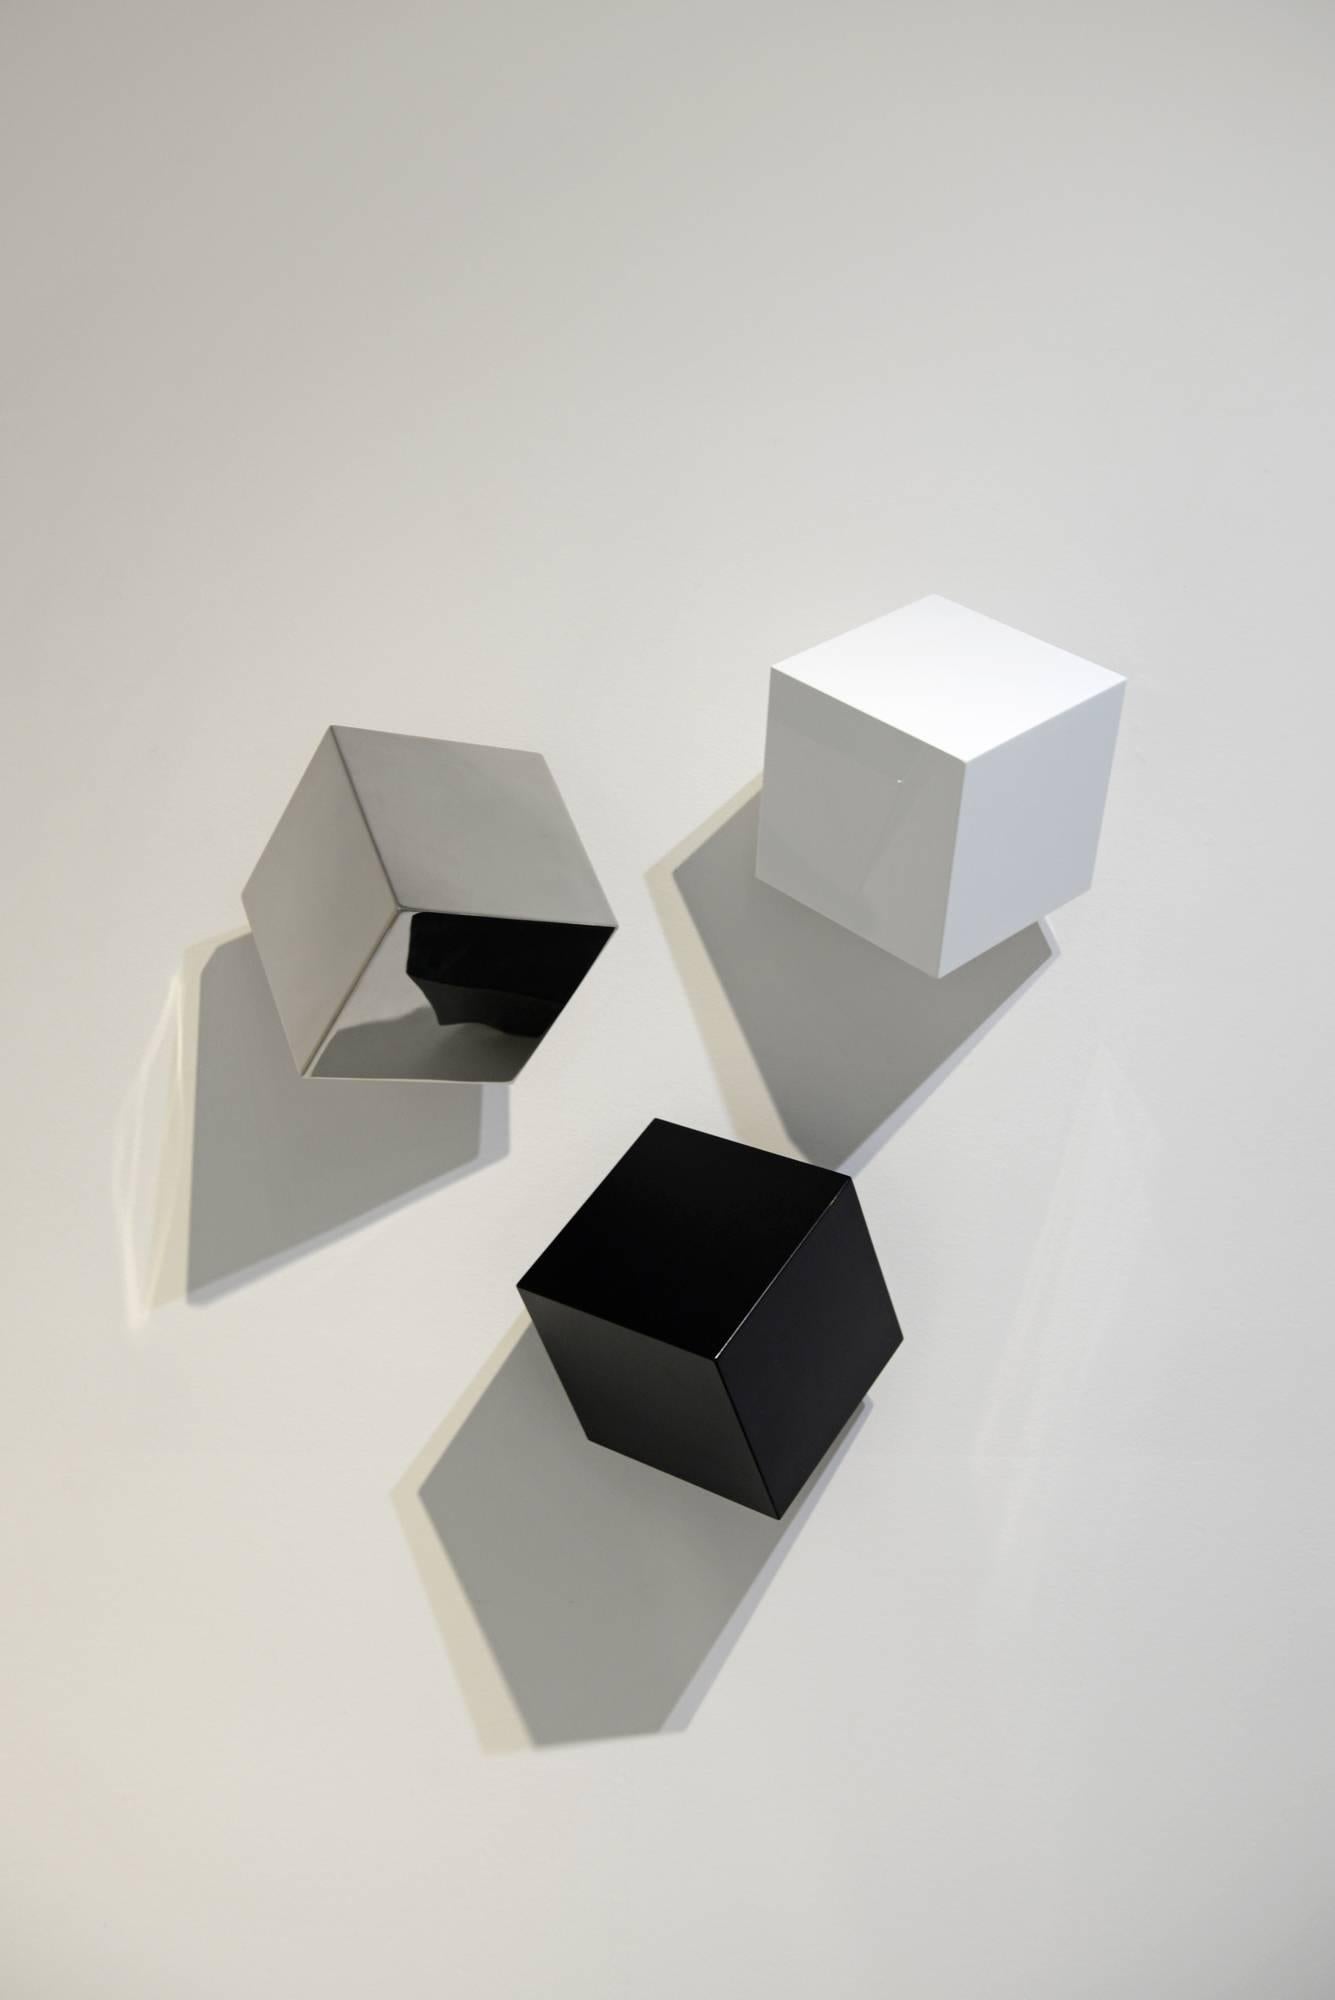 Perspectives - Minimalist Sculpture by Lori Cozen-Geller